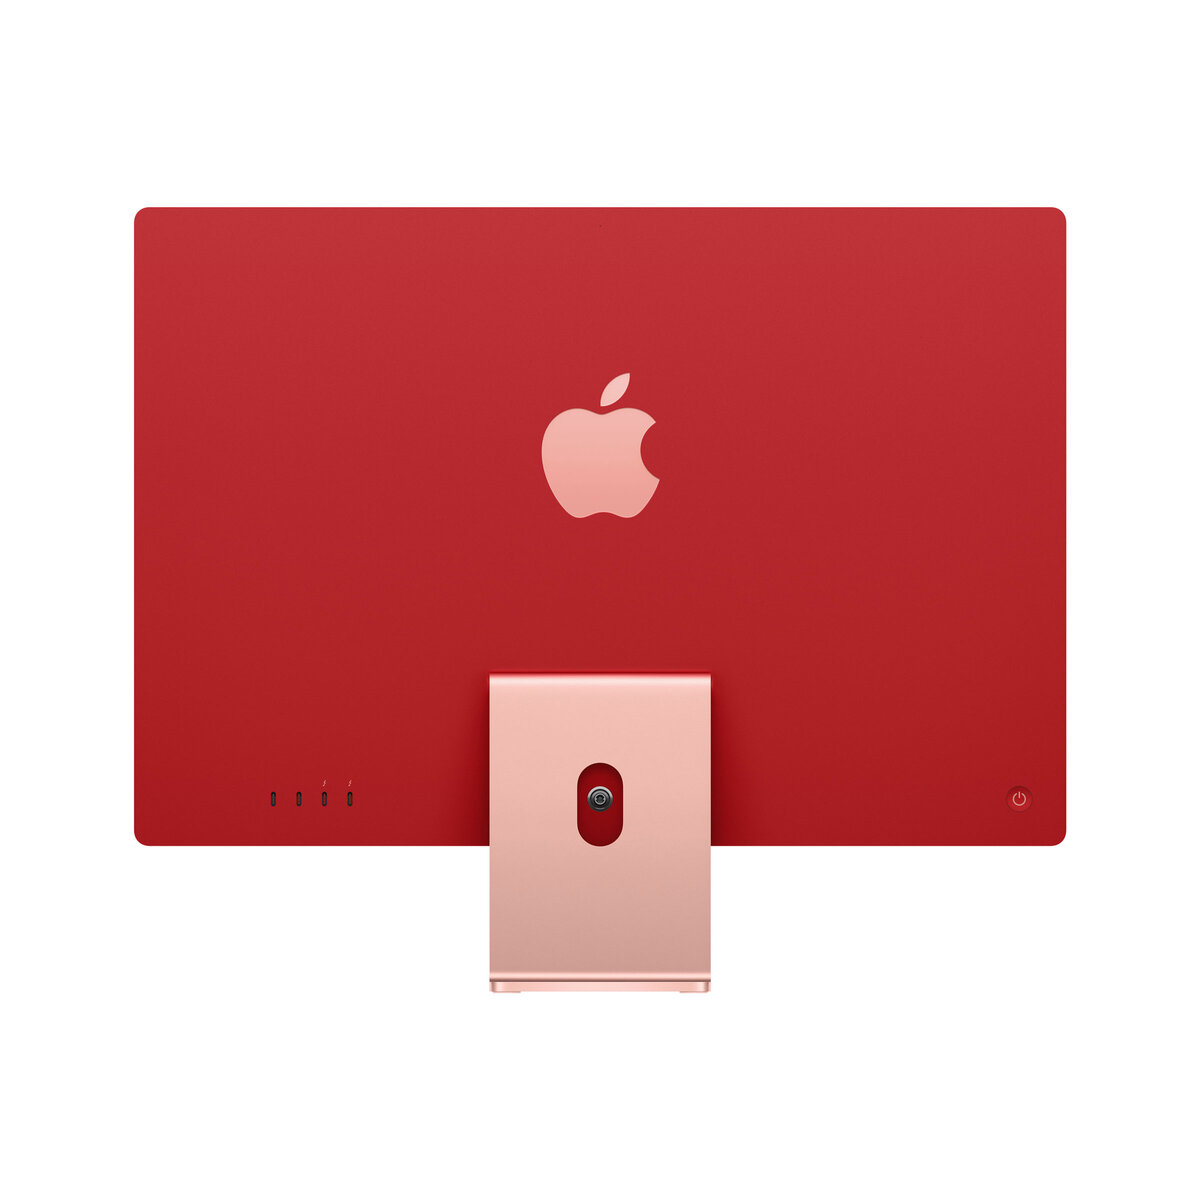 Buy Apple iMac 2021, Apple M1 Chip, 8-Core GPU, 16GB RAM, 512GB SSD, 24 Inch in Pink at costco.co.uk